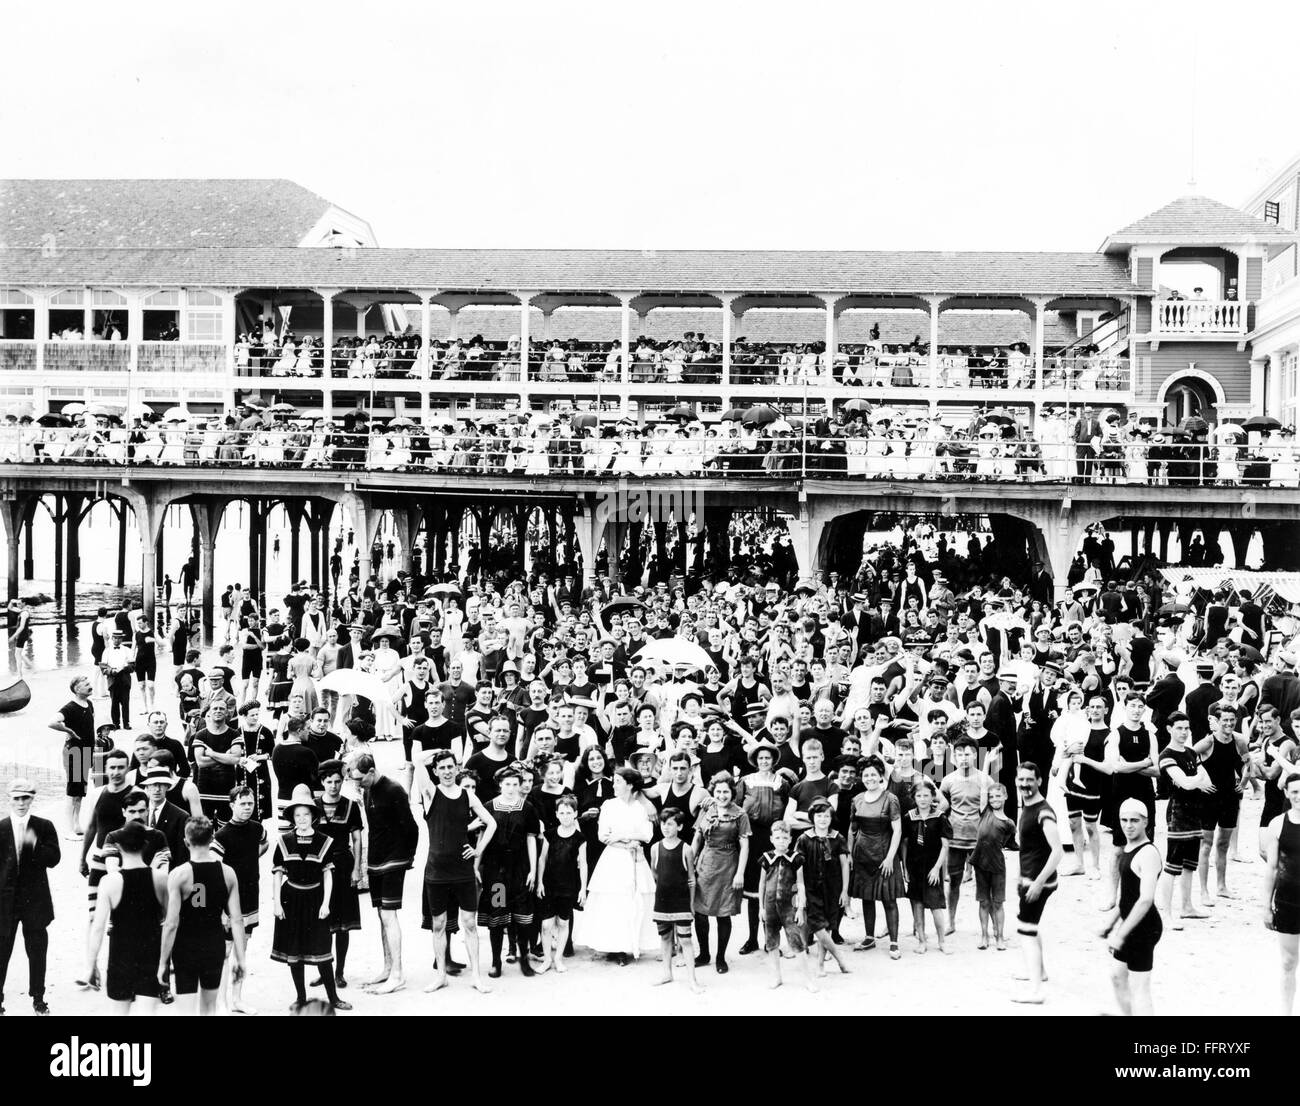 1912 VICTORIAN NEW JERSEY SHORE ATLANTIC CITY COLORIZED PHOTO VINTAGE CAMERA MAN 